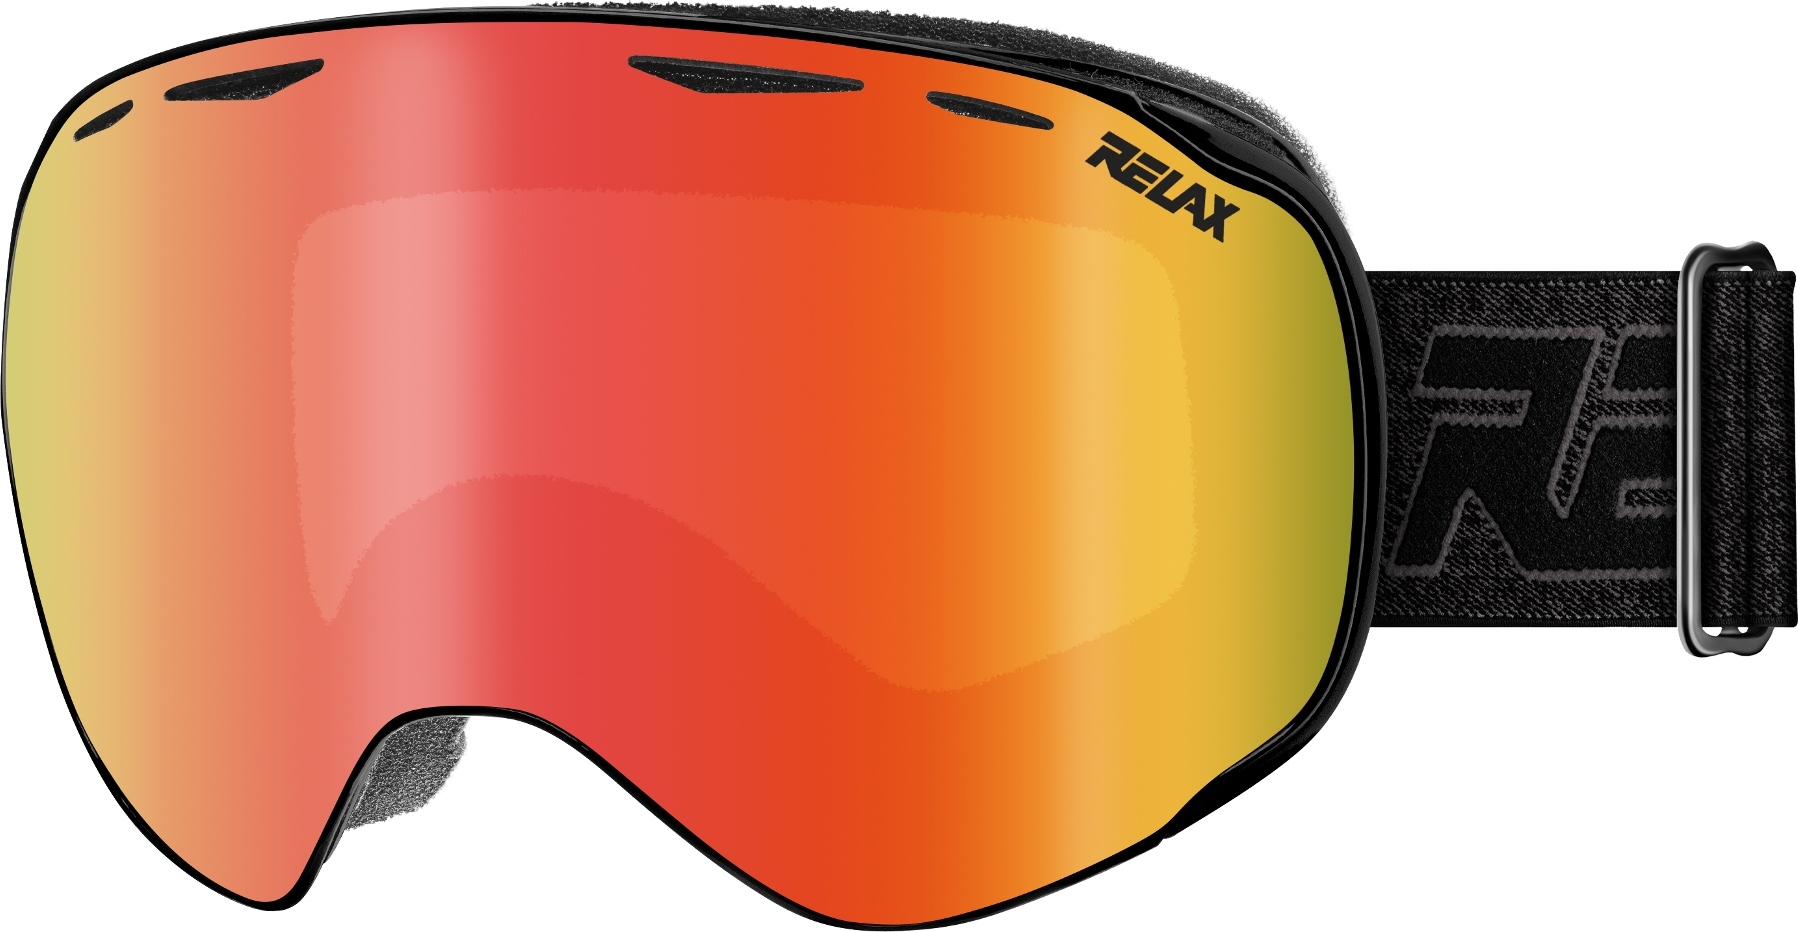 Unisex lyžařské brýle RELAX Arc Tec černé